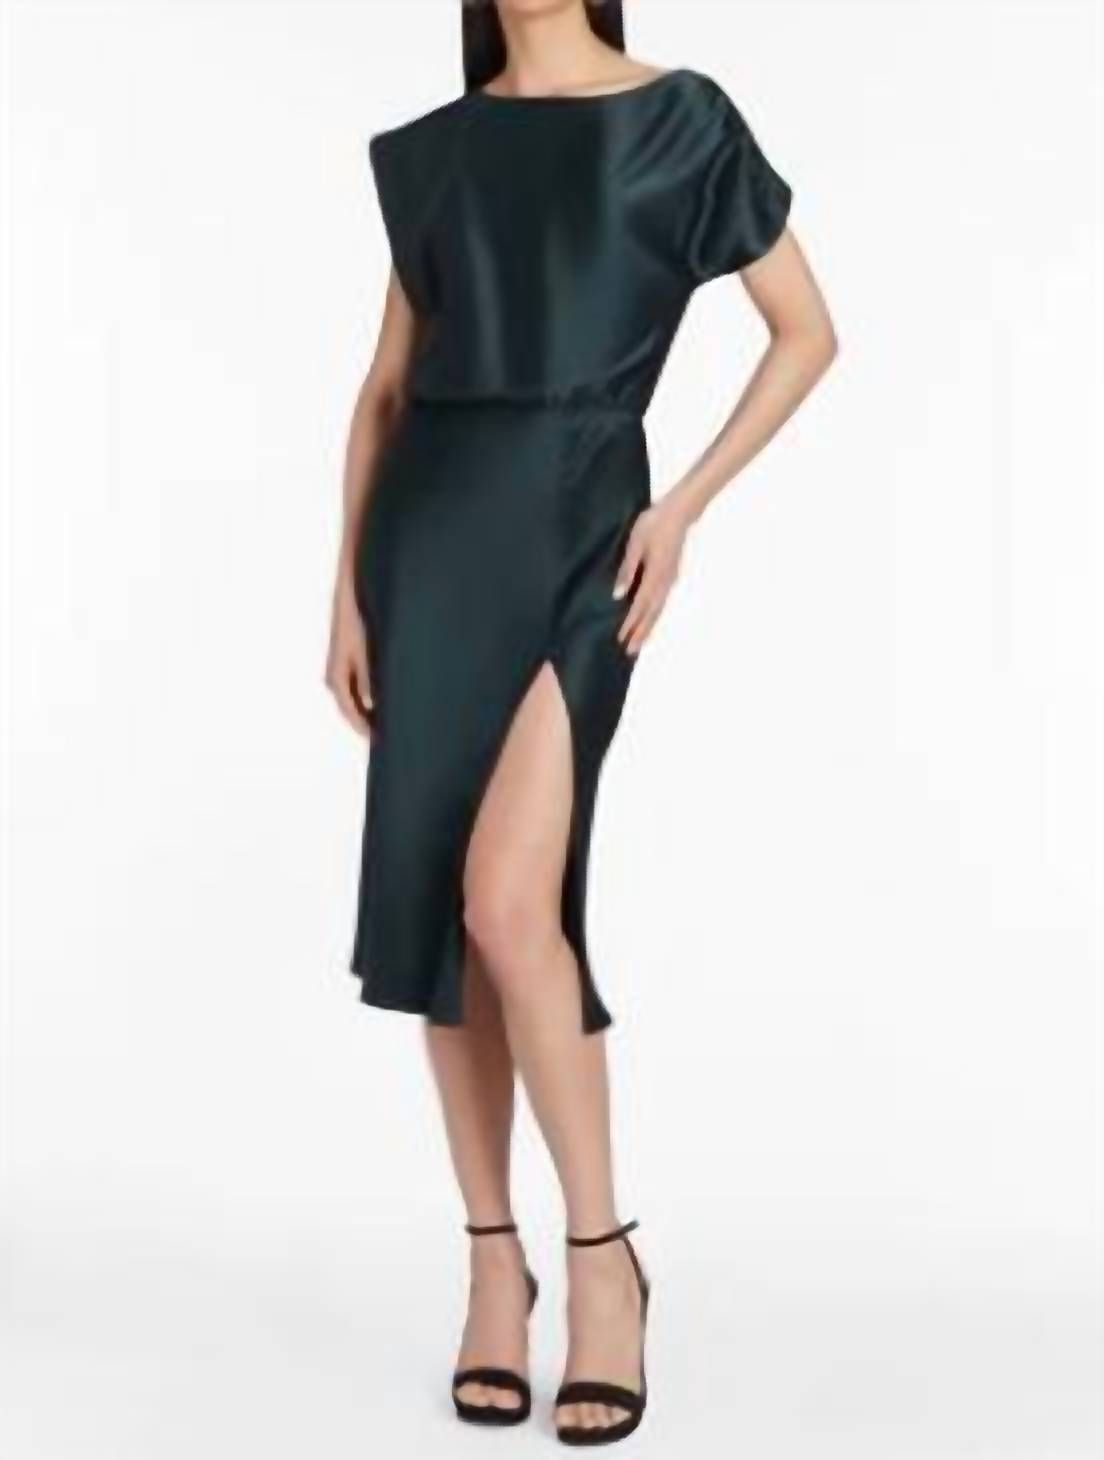 Style 1-3675644091-2901 Amanda Uprichard Size M Satin Black Cocktail Dress on Queenly